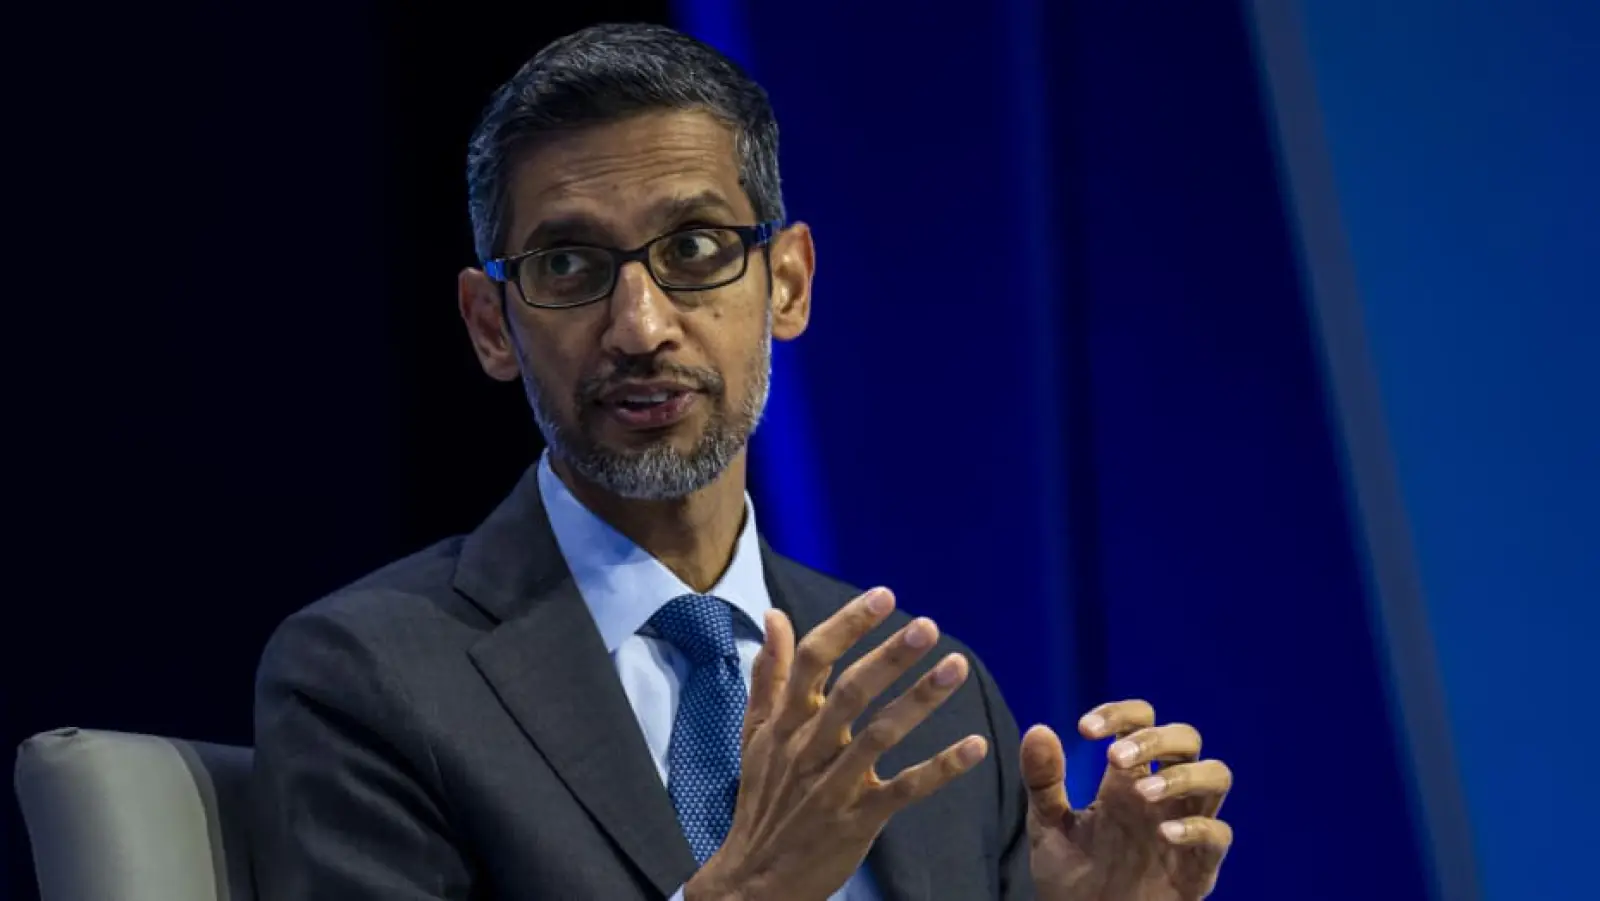 Google's AI called Barack Obama a Muslim, Sundar Pichai said - what nonsense